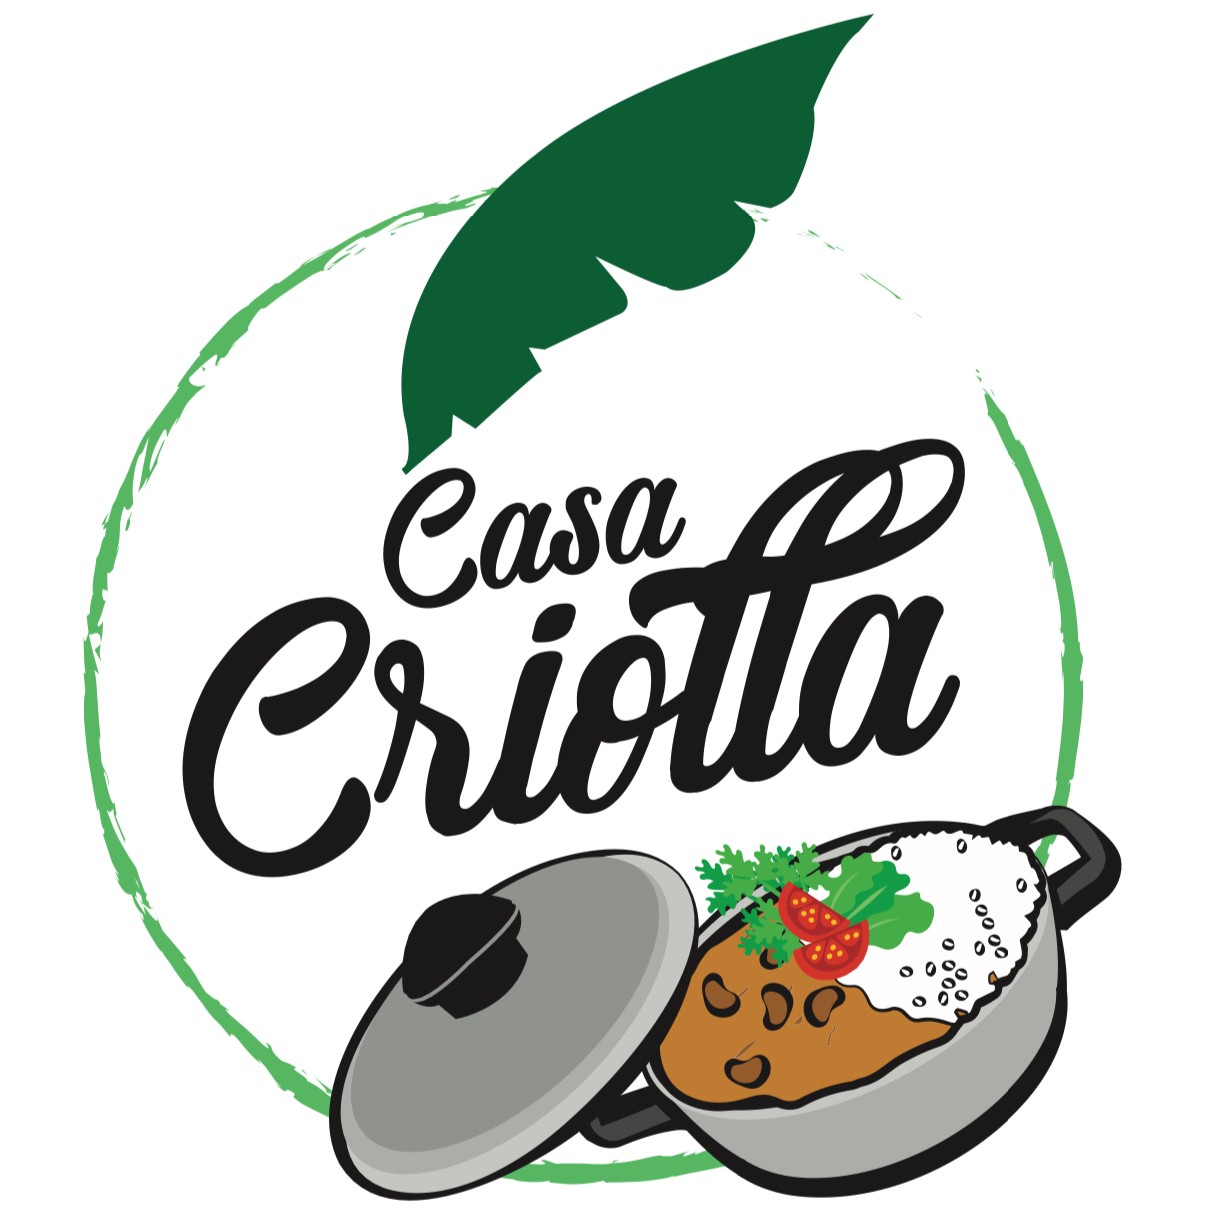 Casa Criolla - Downtown Allentown Market